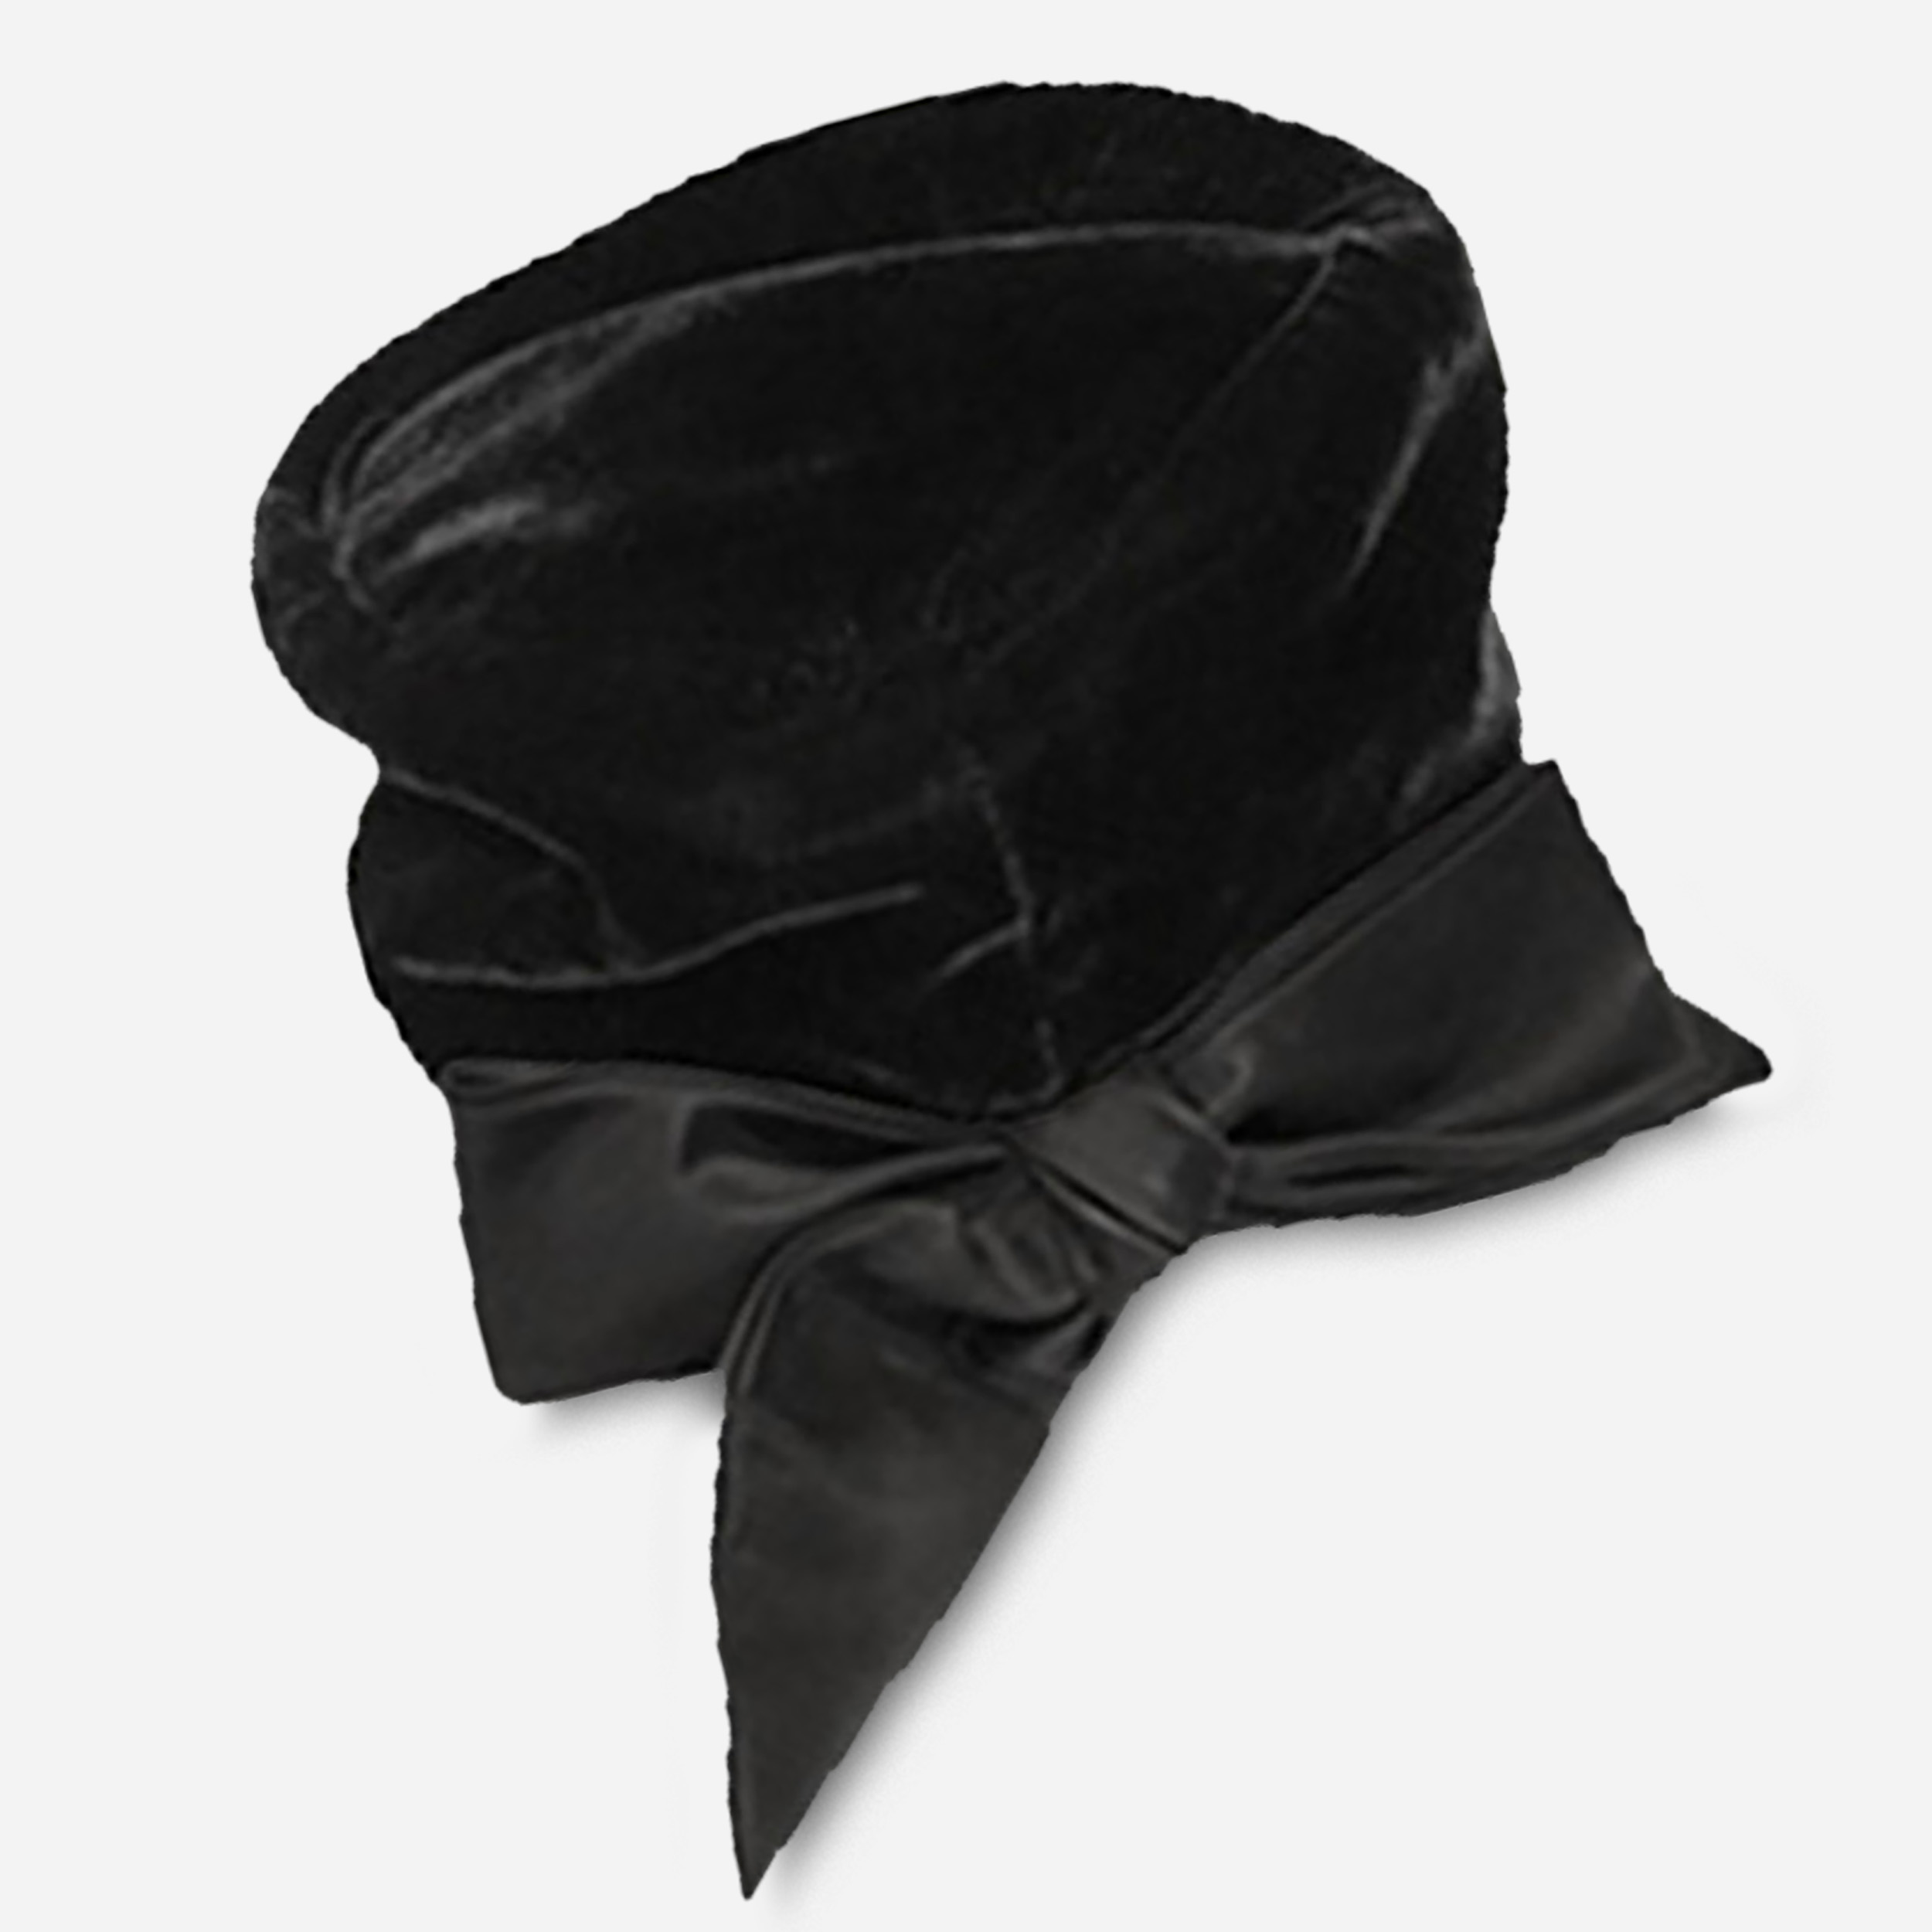 ranleigh black hat